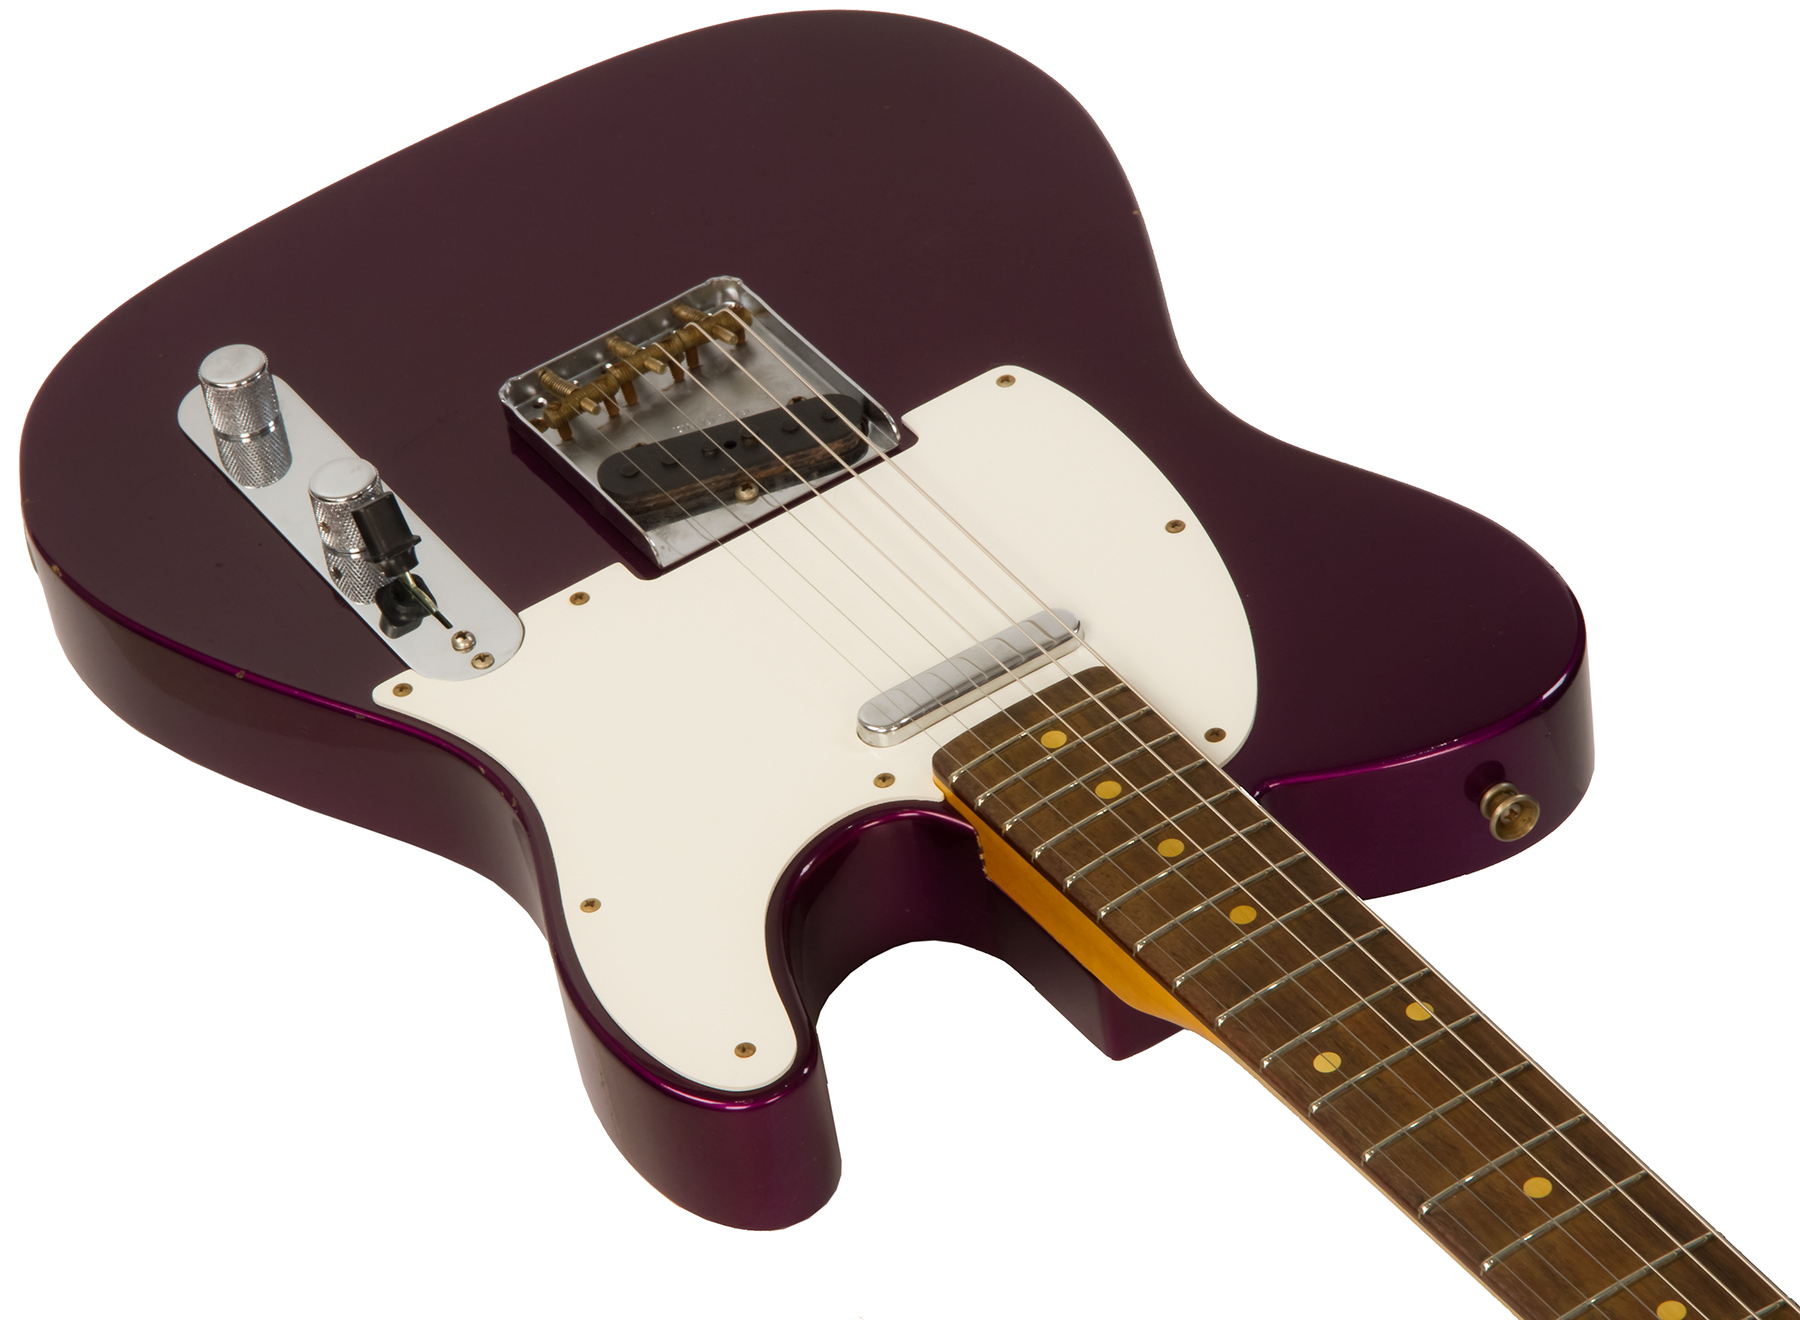 Fender Custom Shop Tele 1960 Rw #cz549121 - Journeyman Relic Purple Metallic - Tel shape electric guitar - Variation 2